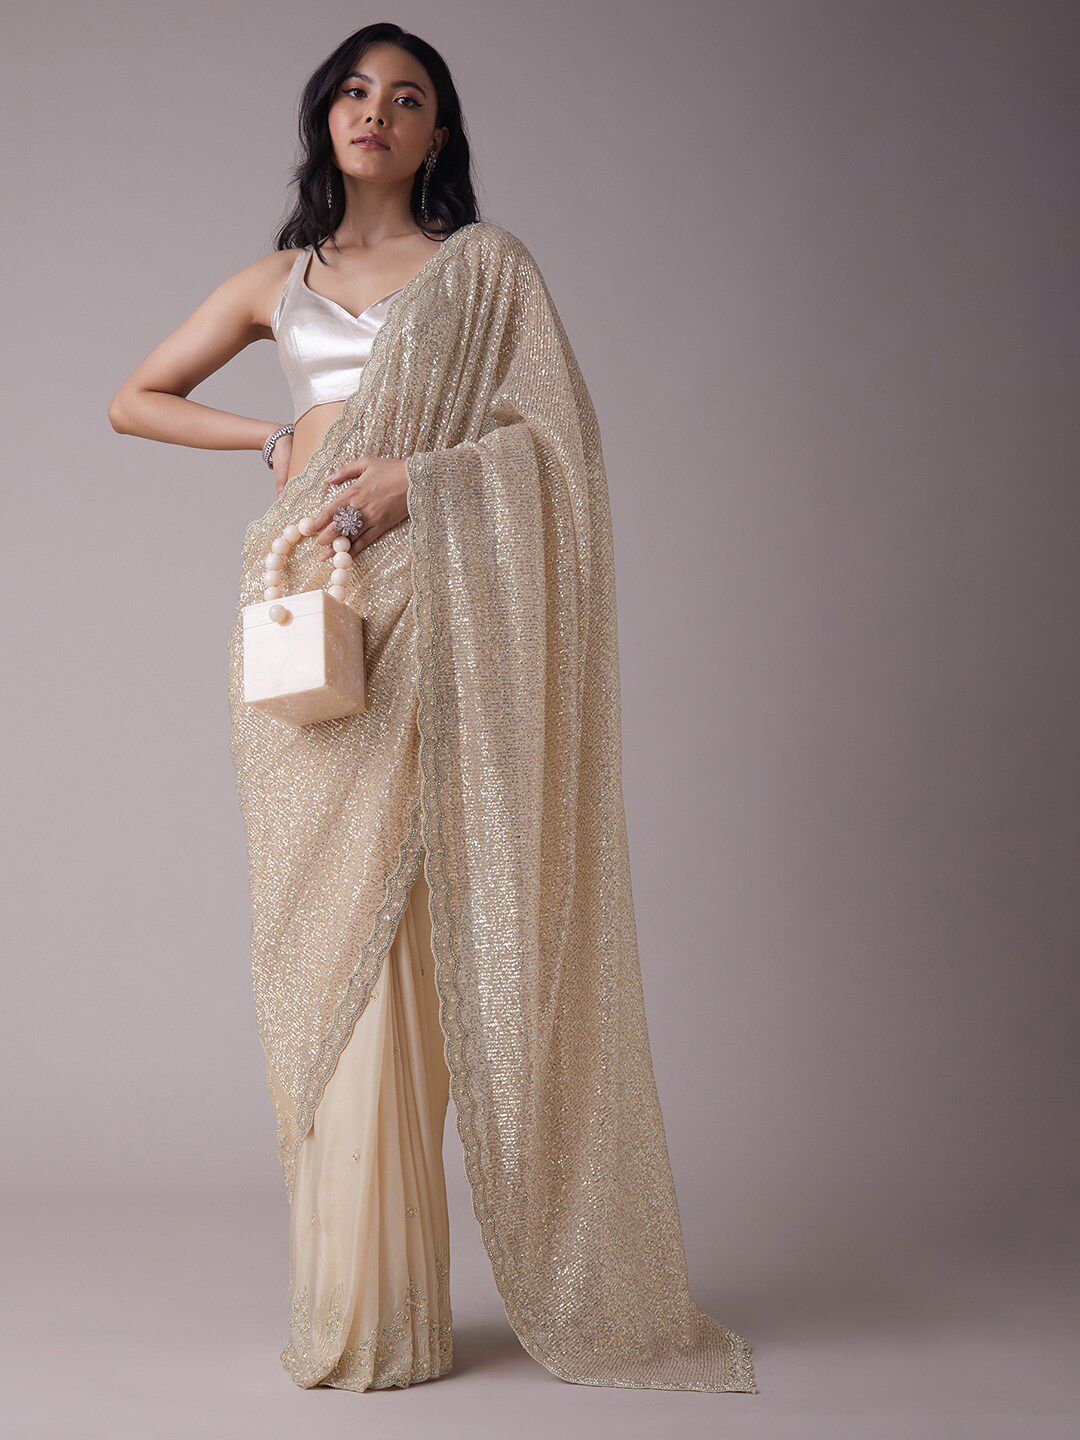 KALKI Fashion Embellished Sequinned Net Saree Price in India